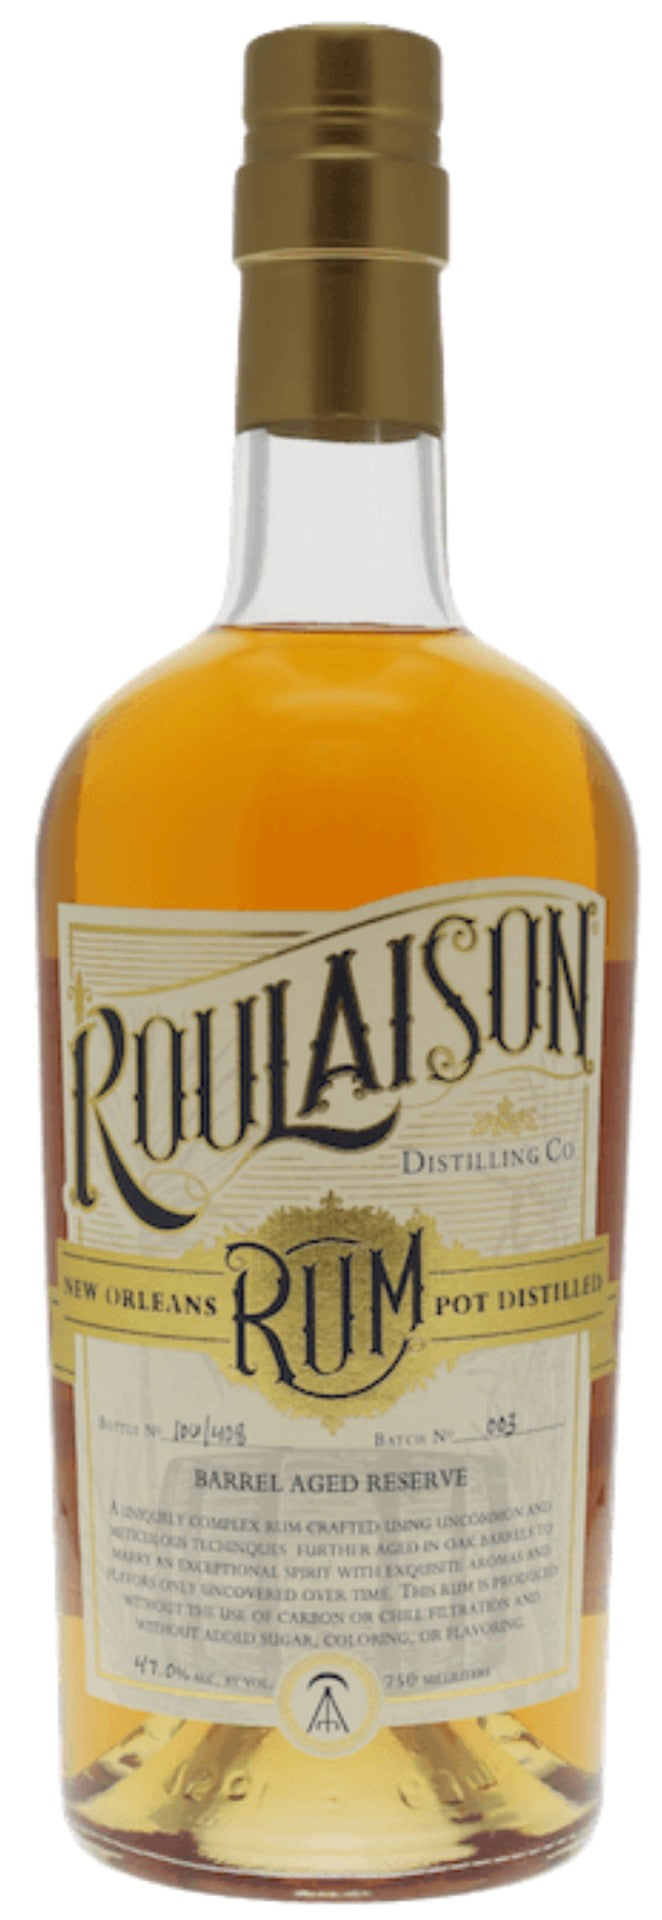 Roulaison Barrel Aged Reserve Rum